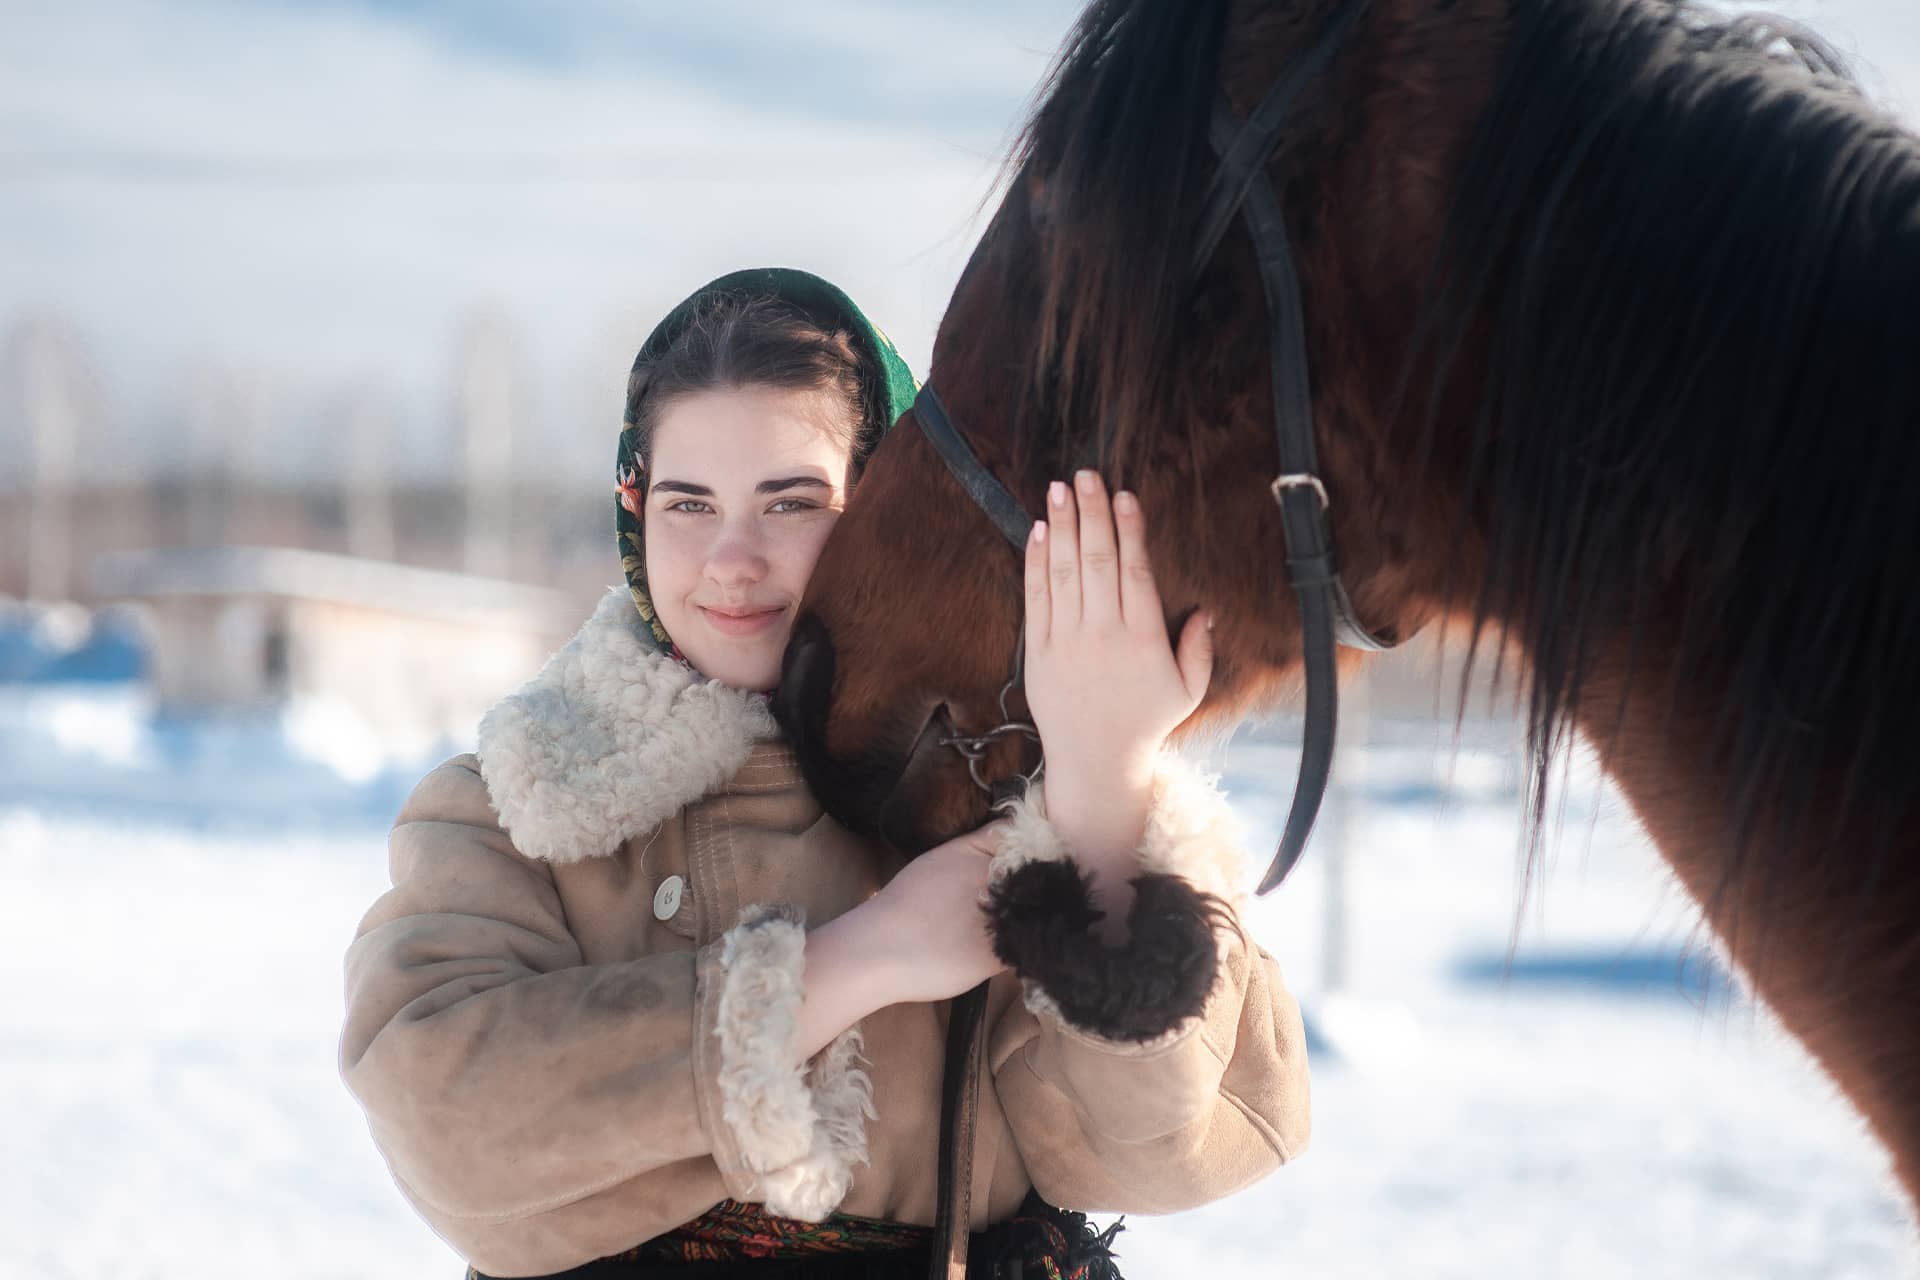 A Russian girl wearing sheepskin coat hugging the head of a horse in winter